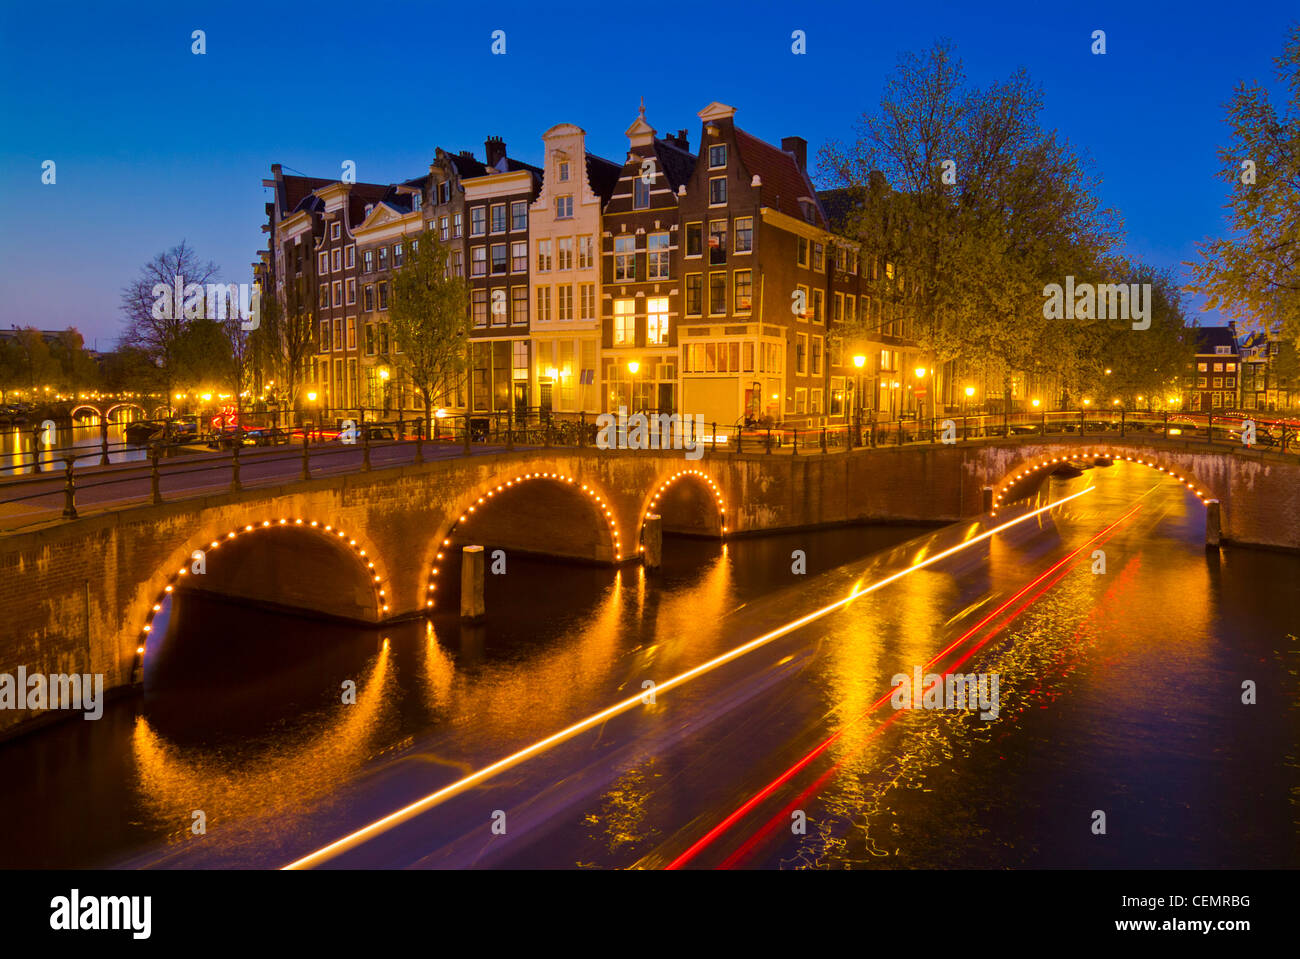 Canal tour barca lasciando sentieri di luce sotto i ponti sul canale Keizersgracht Amsterdam Paesi Bassi Olanda UE Europa Foto Stock